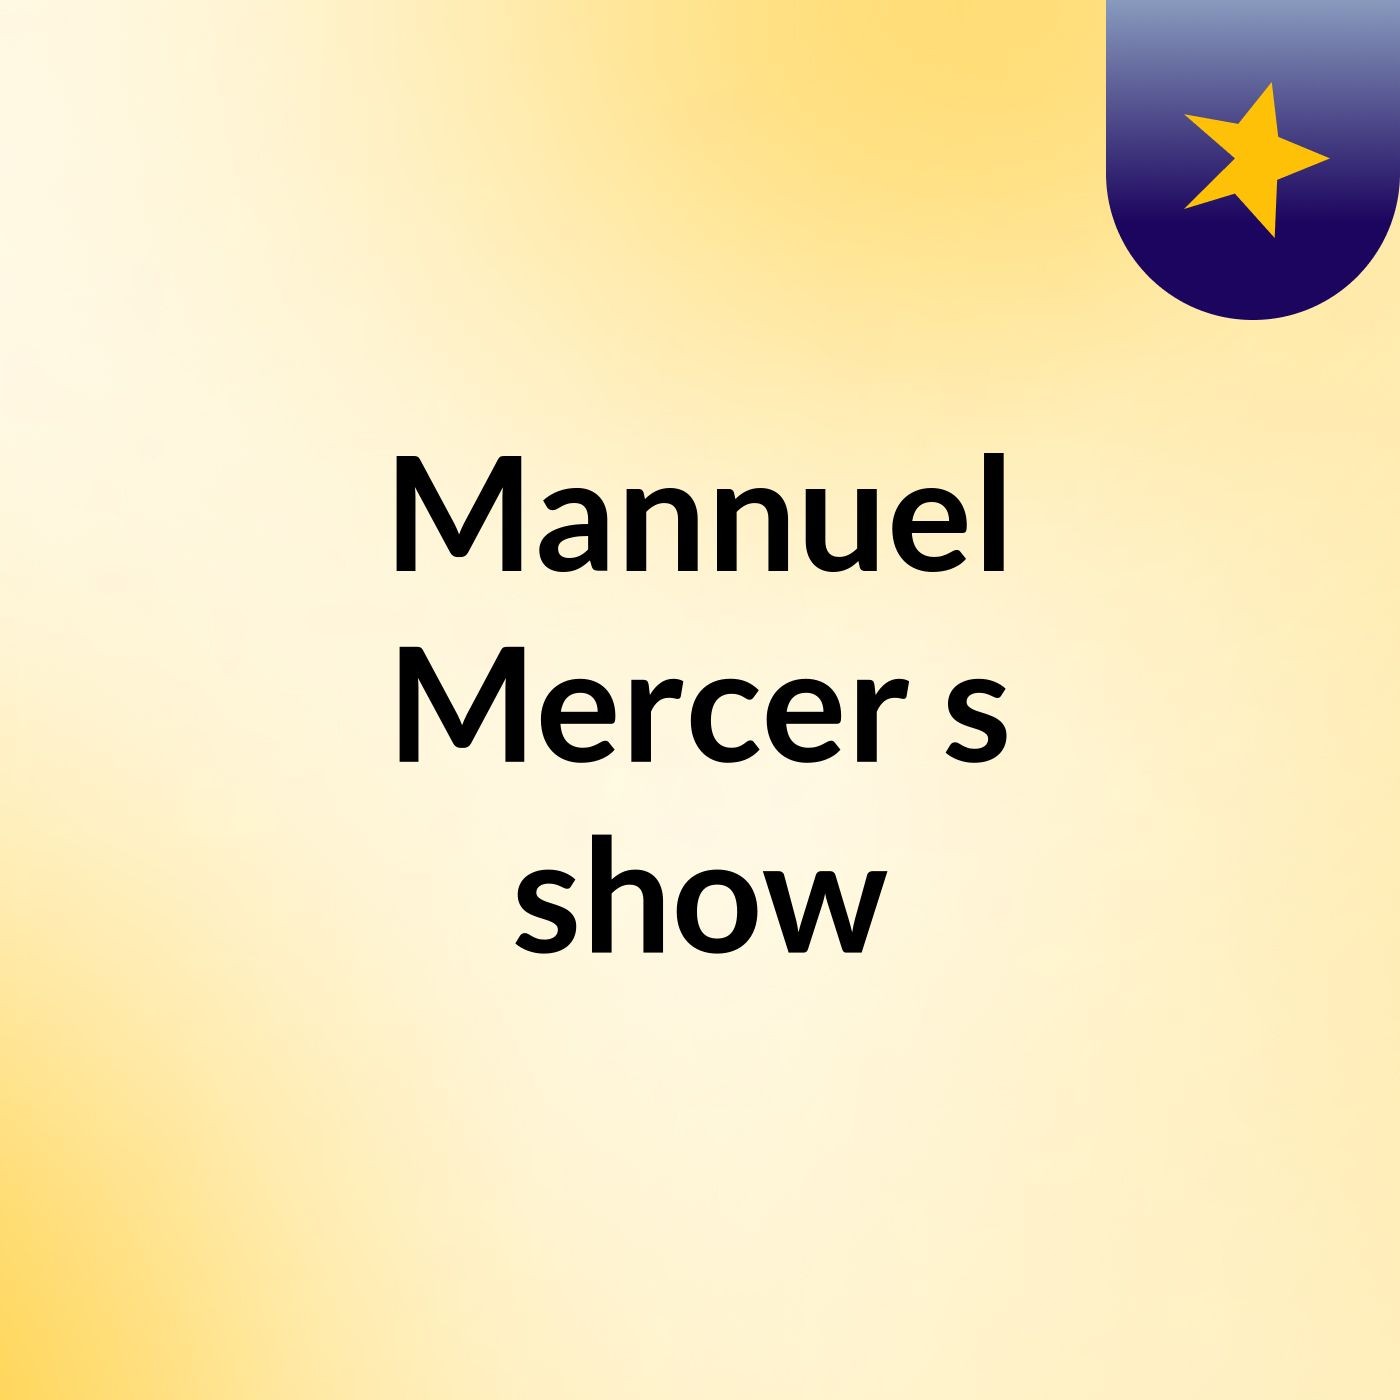 Episode 2 - Mannuel Mercer's show